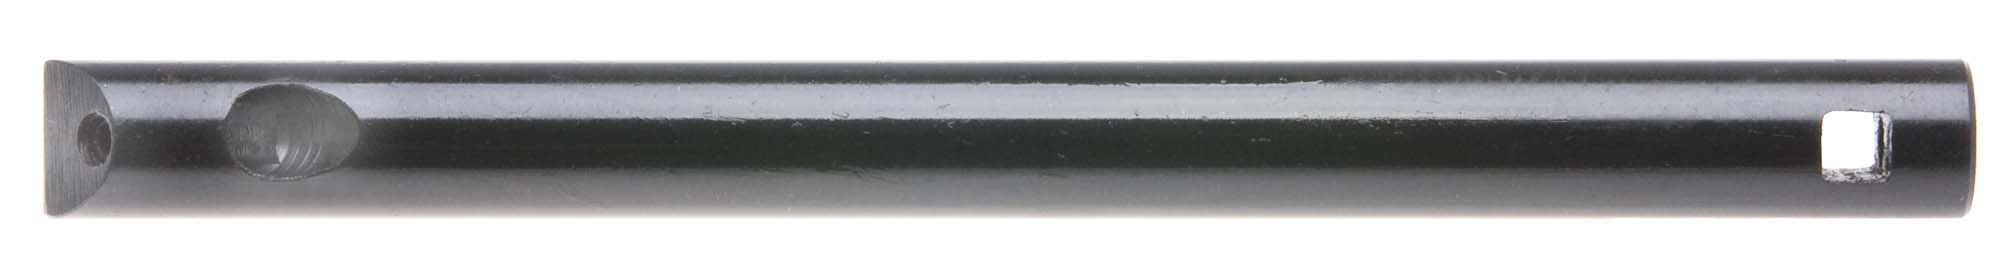 1-1/4" Double End Boring Bar- High Speed Steel Toolbit Type